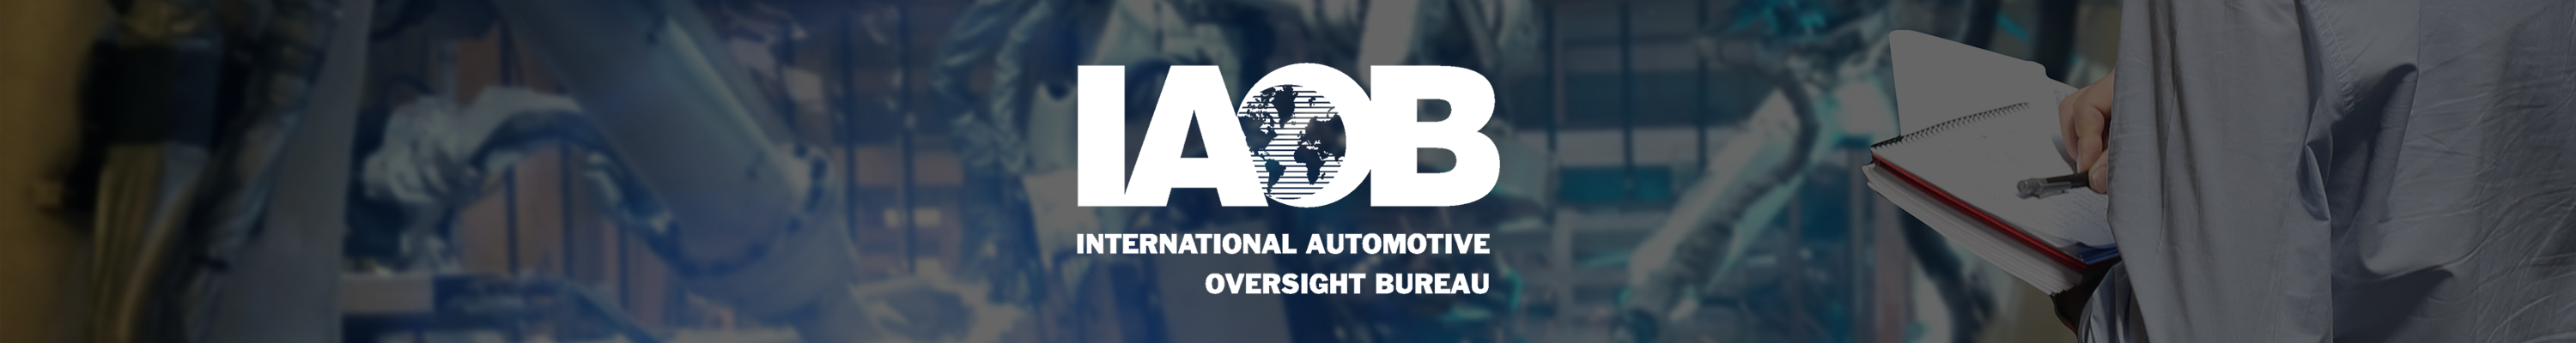 iaob-iatf-auditor-case-study-banner